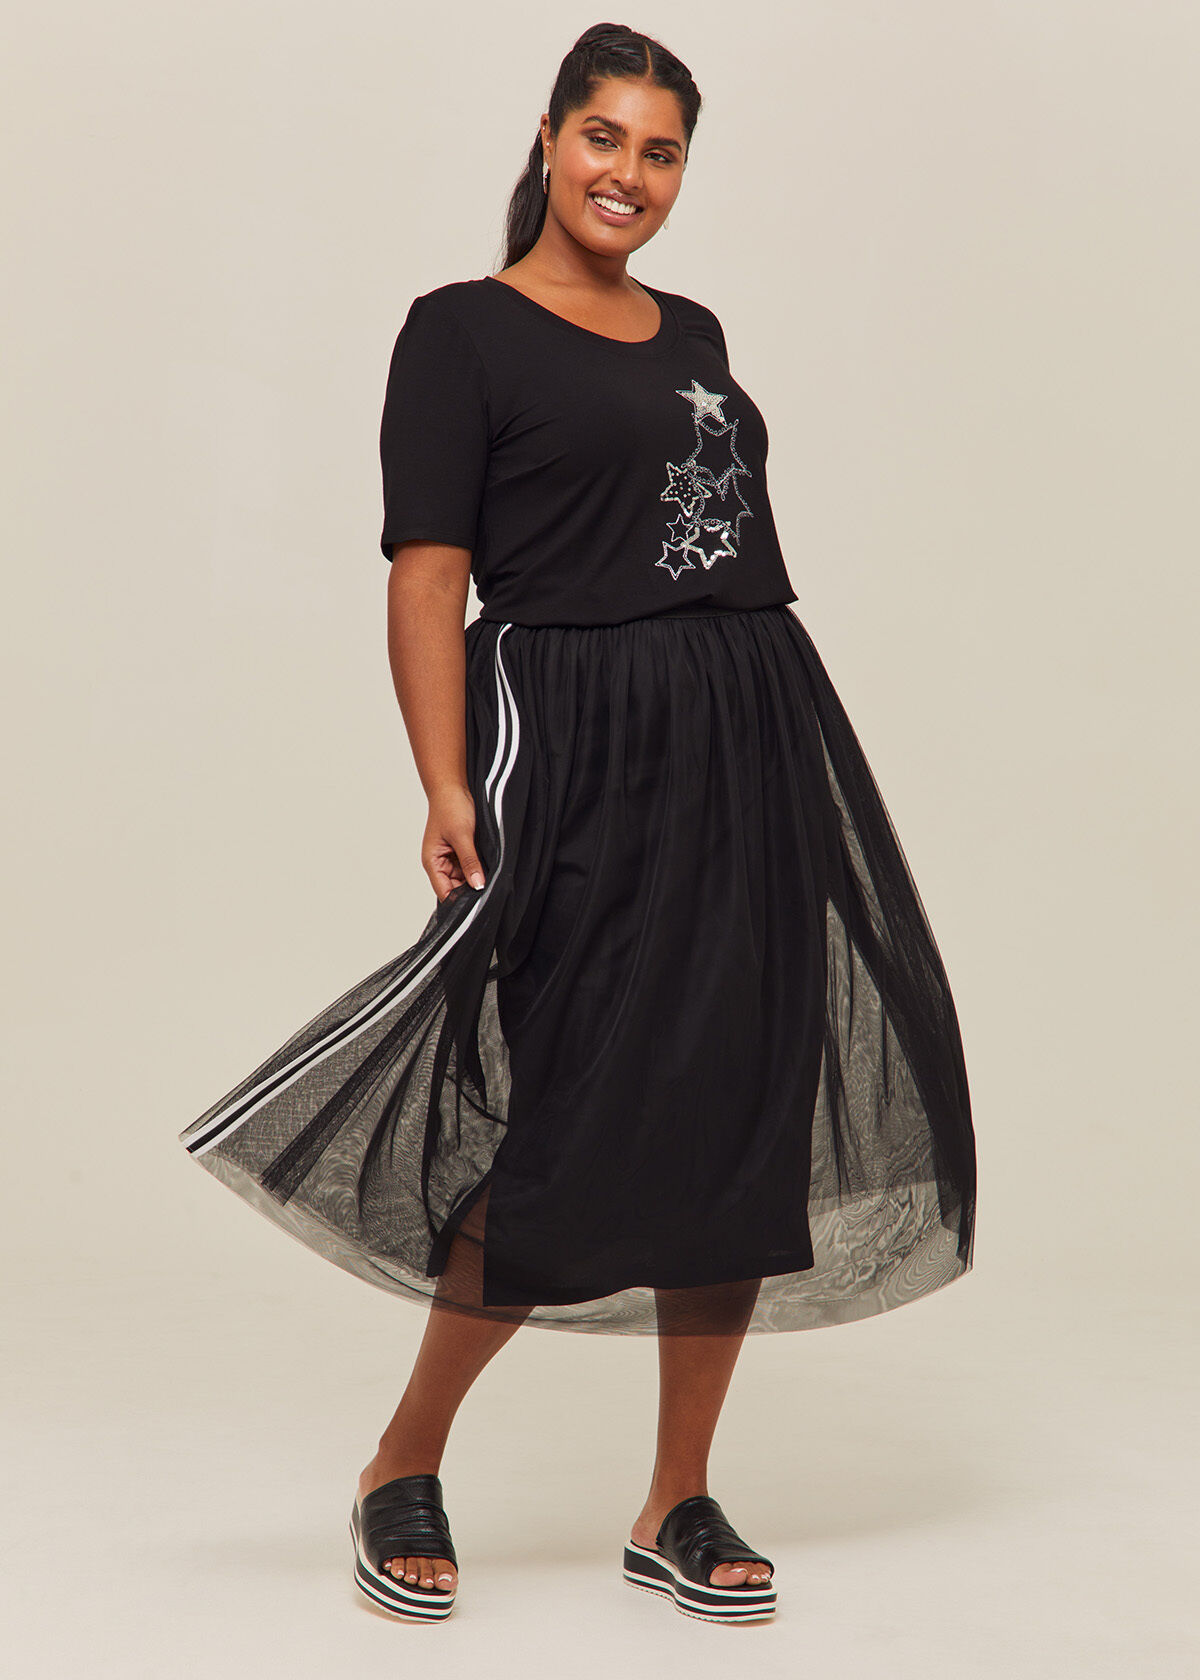 Attic Salt Skirts  Buy Attic Salt Leopard Butt Shorts With Black Tulle  Skirt Online  Nykaa Fashion